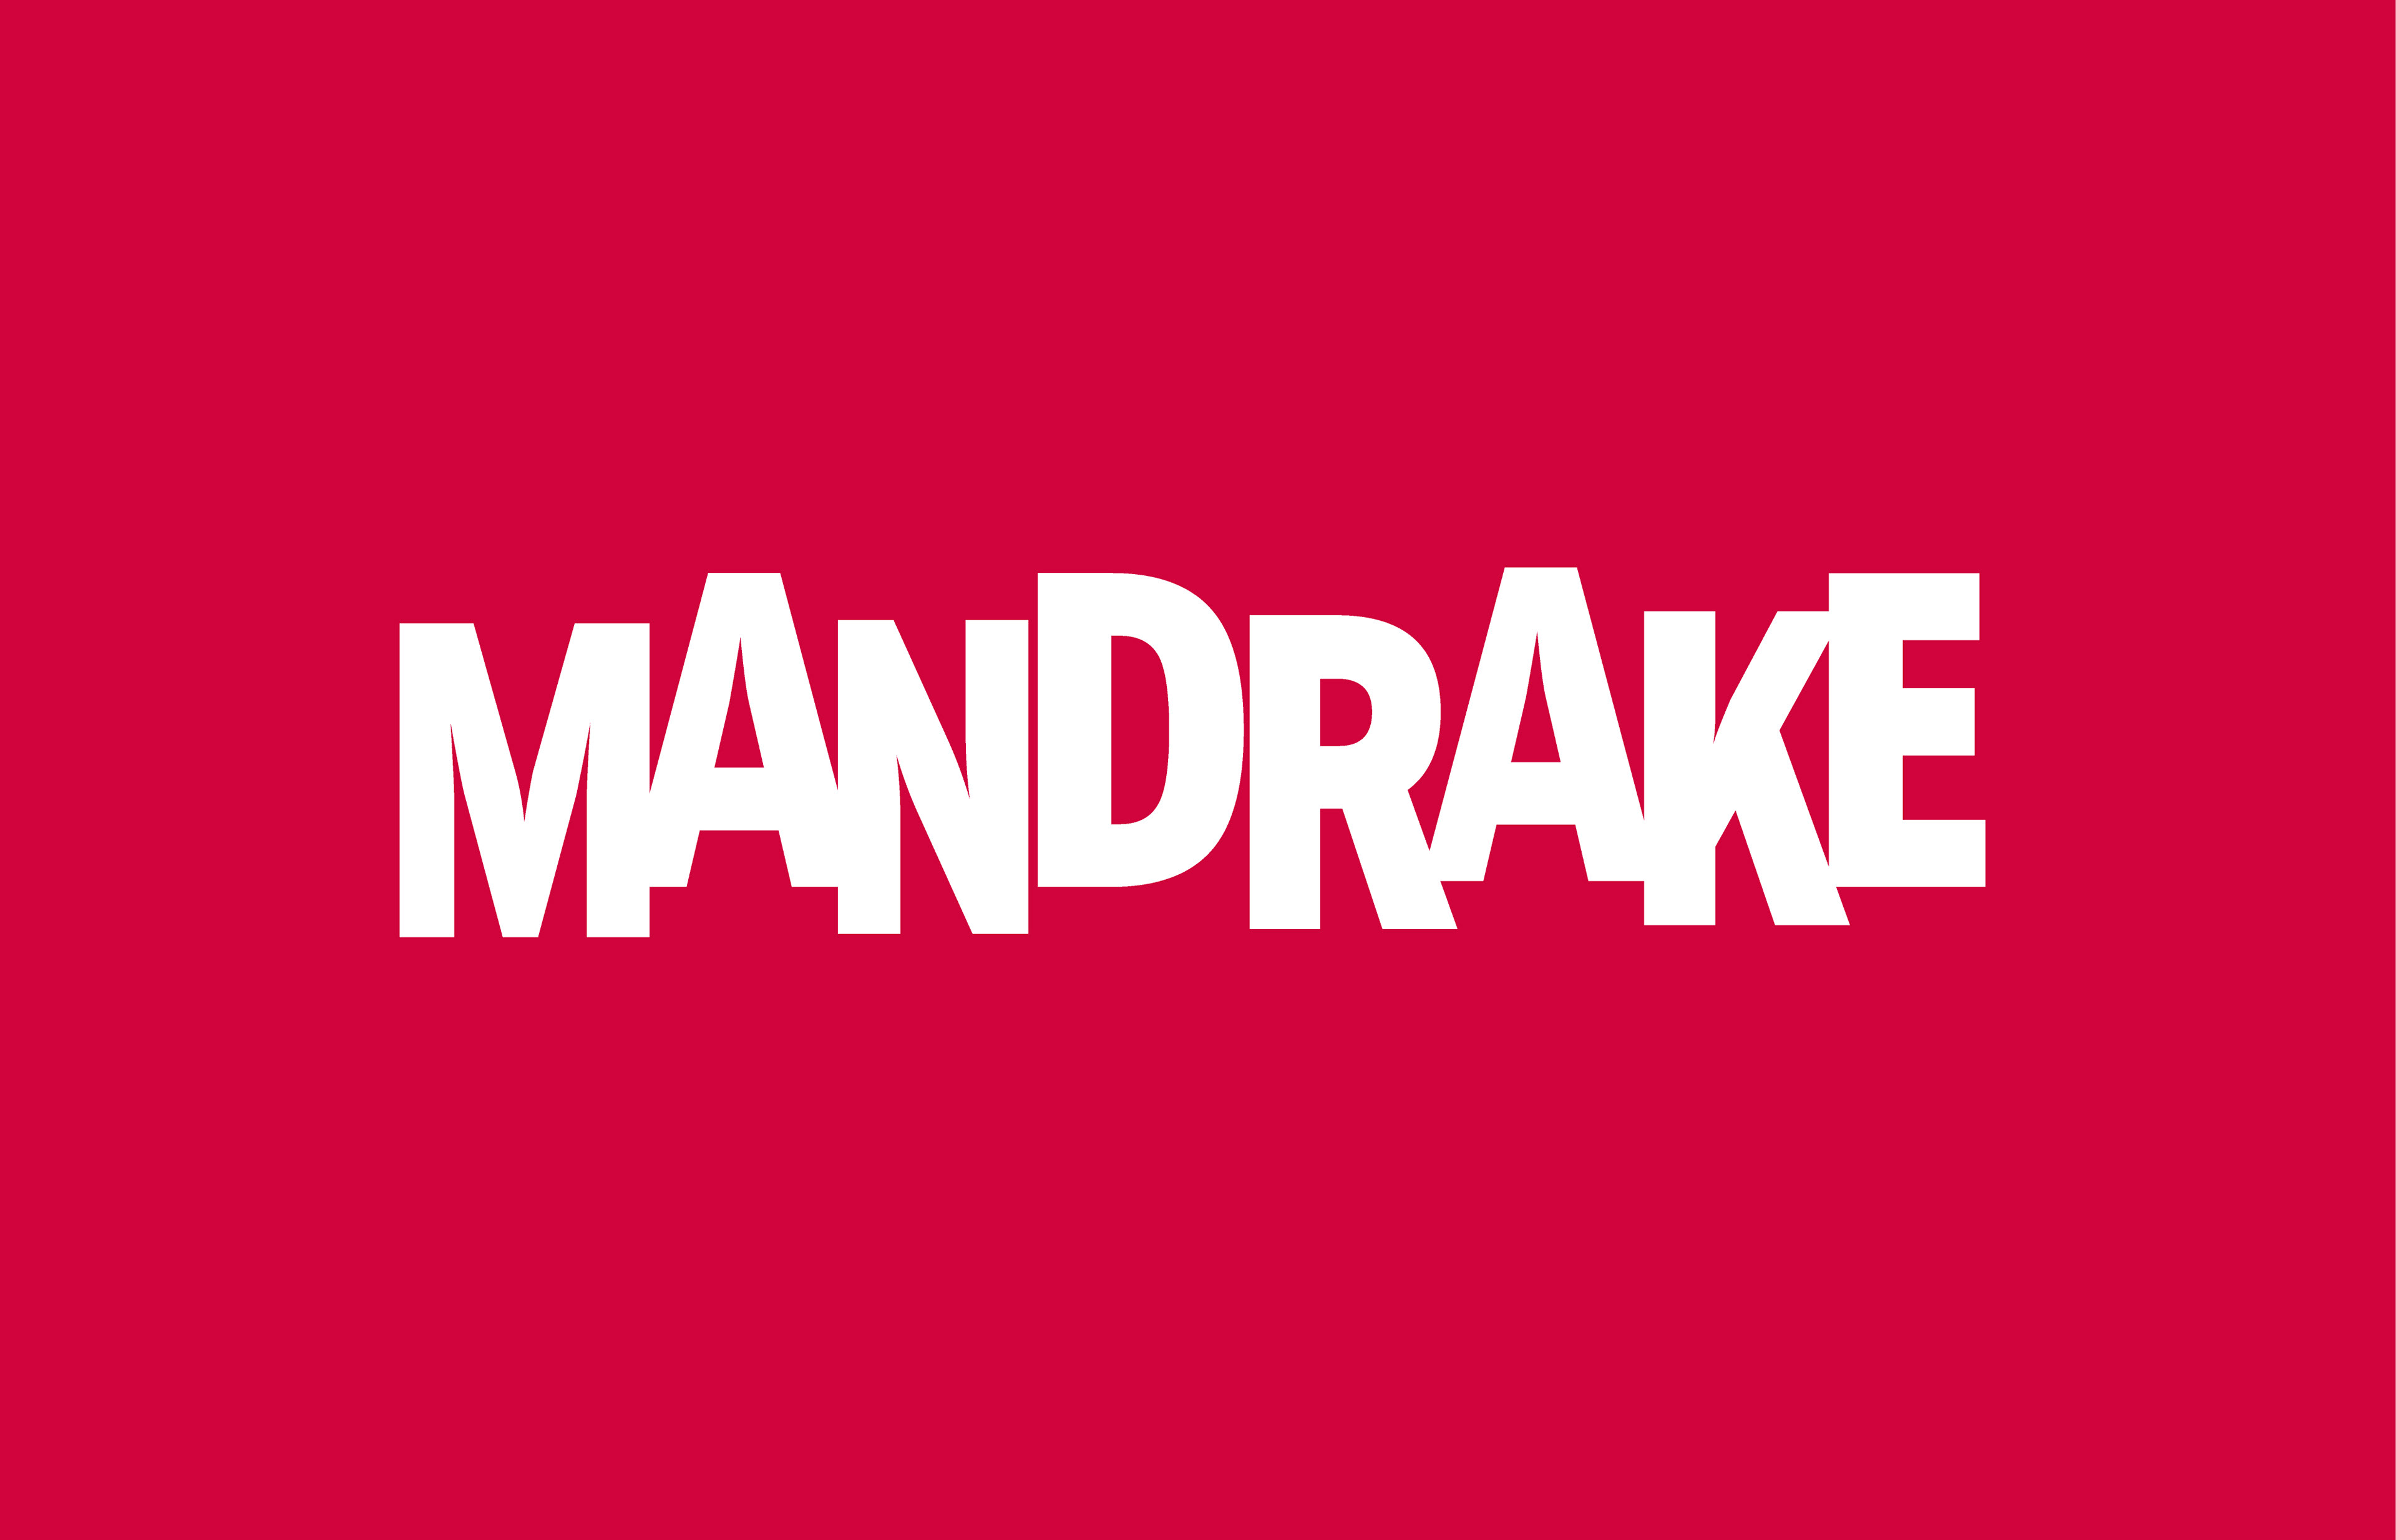 Os Mandrake